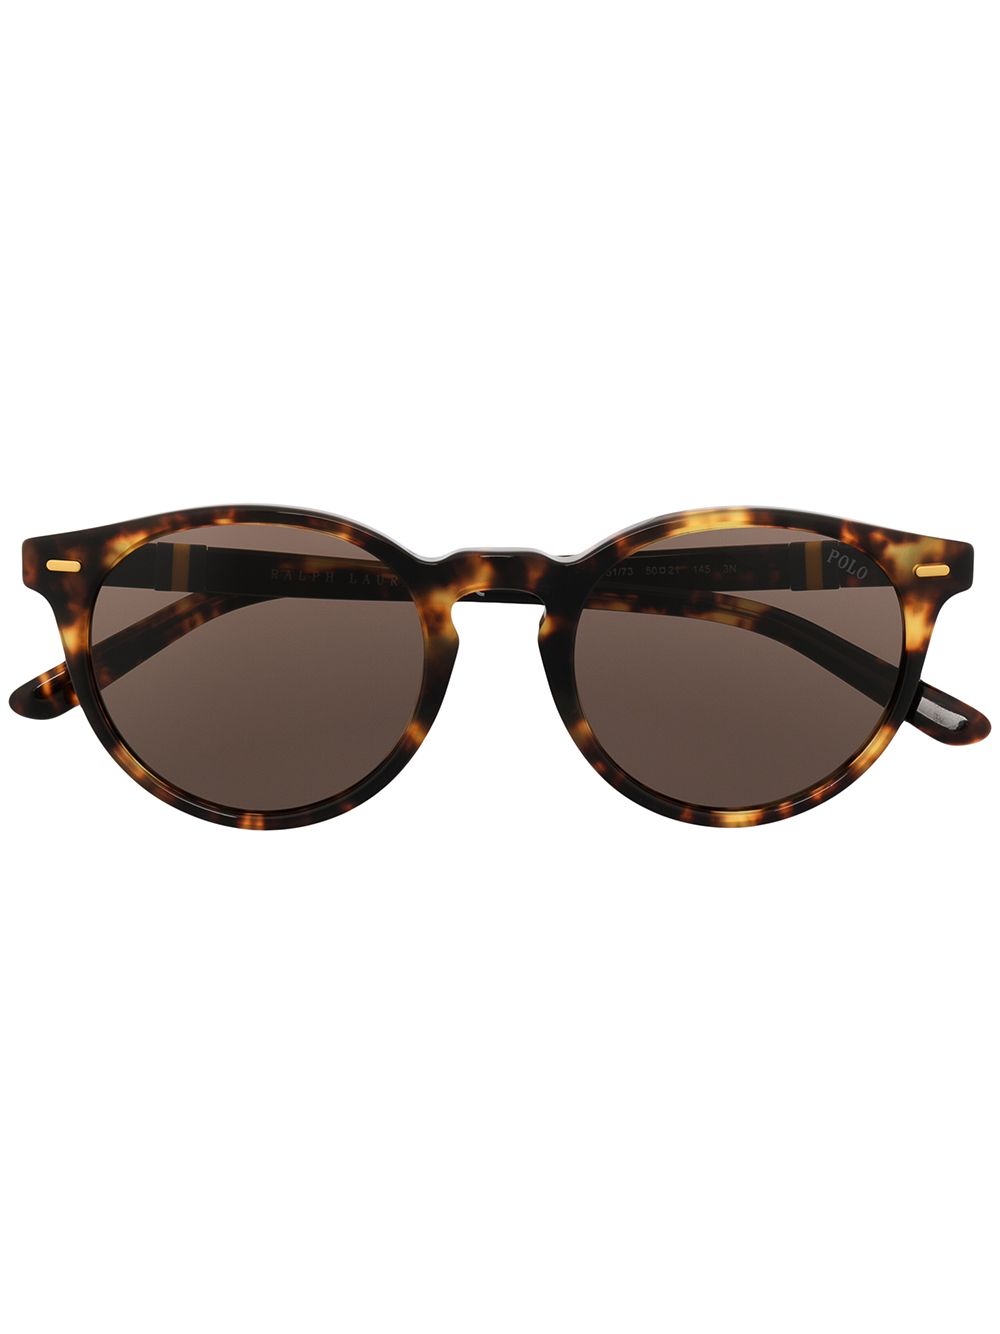 Polo Ralph Lauren tortoiseshell round frame sunglasses - Brown von Polo Ralph Lauren